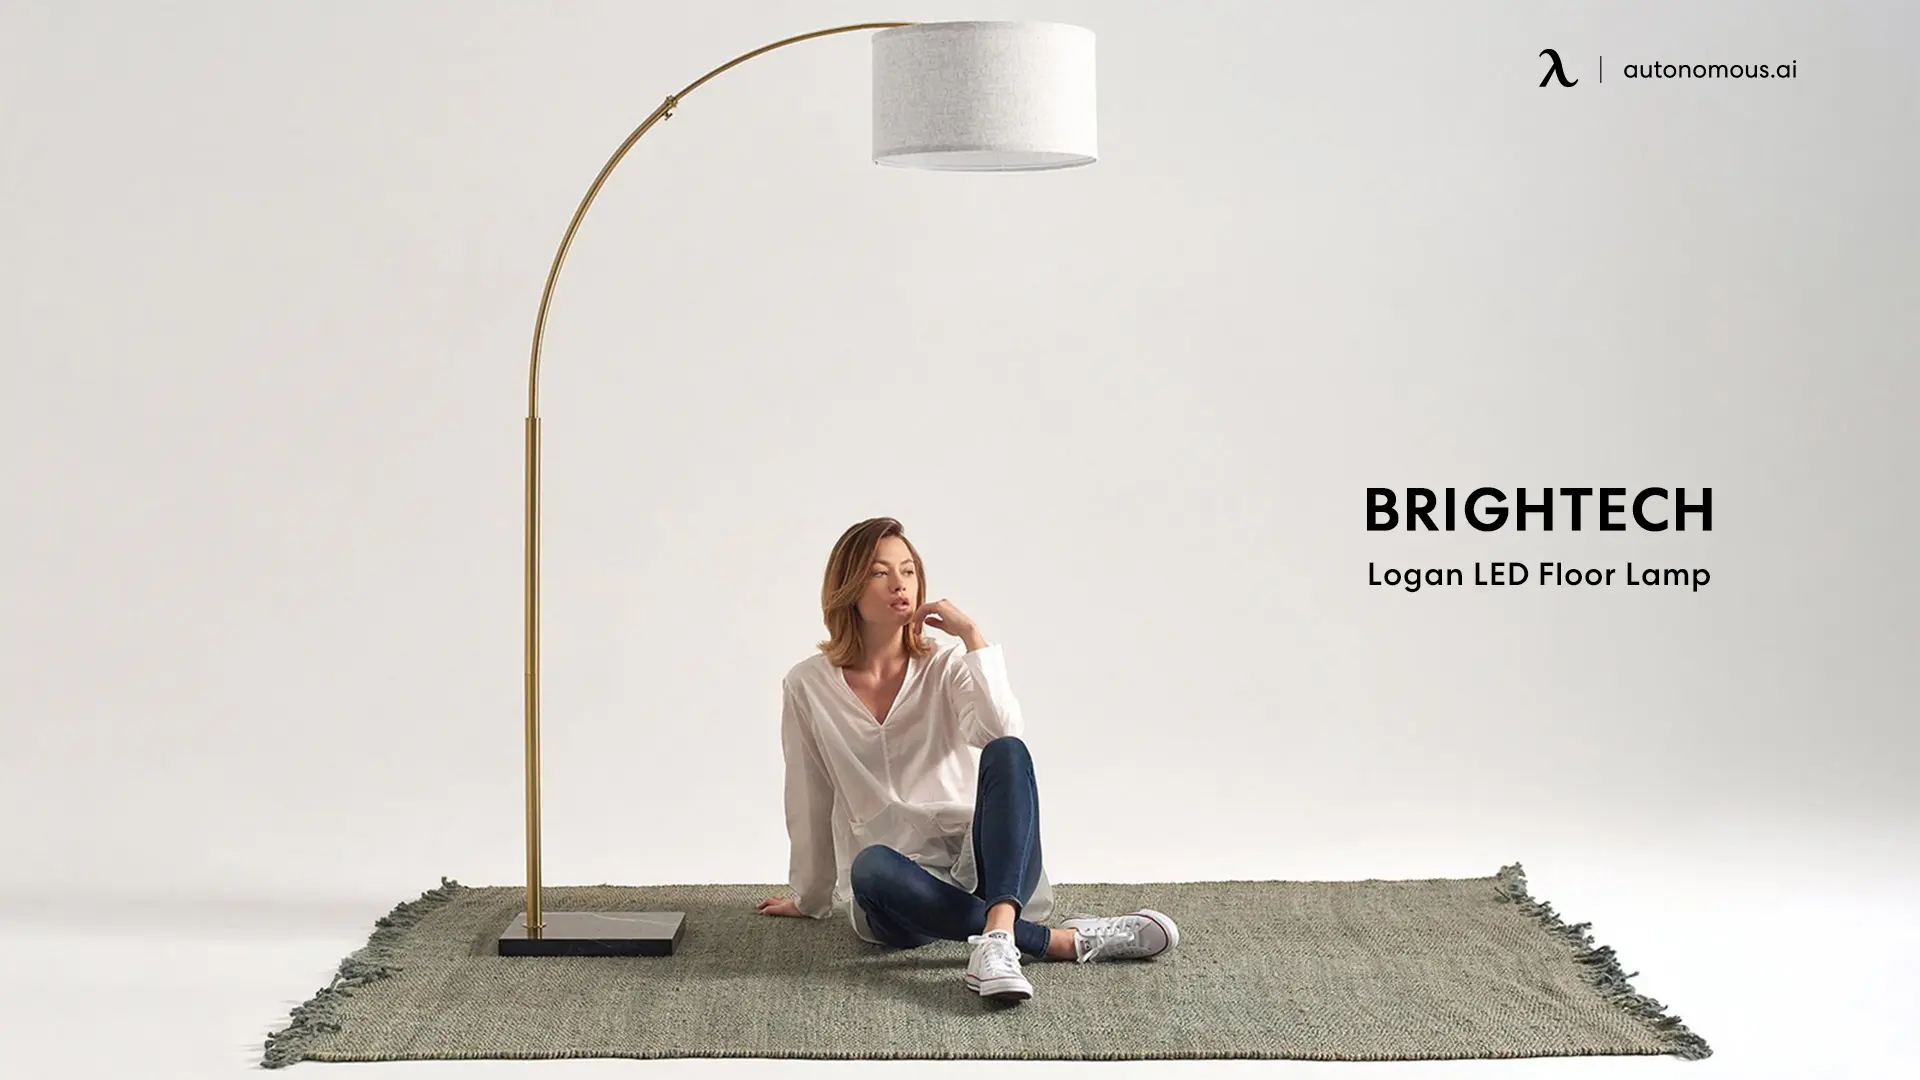 Logan LED Floor Lamp by Brightech